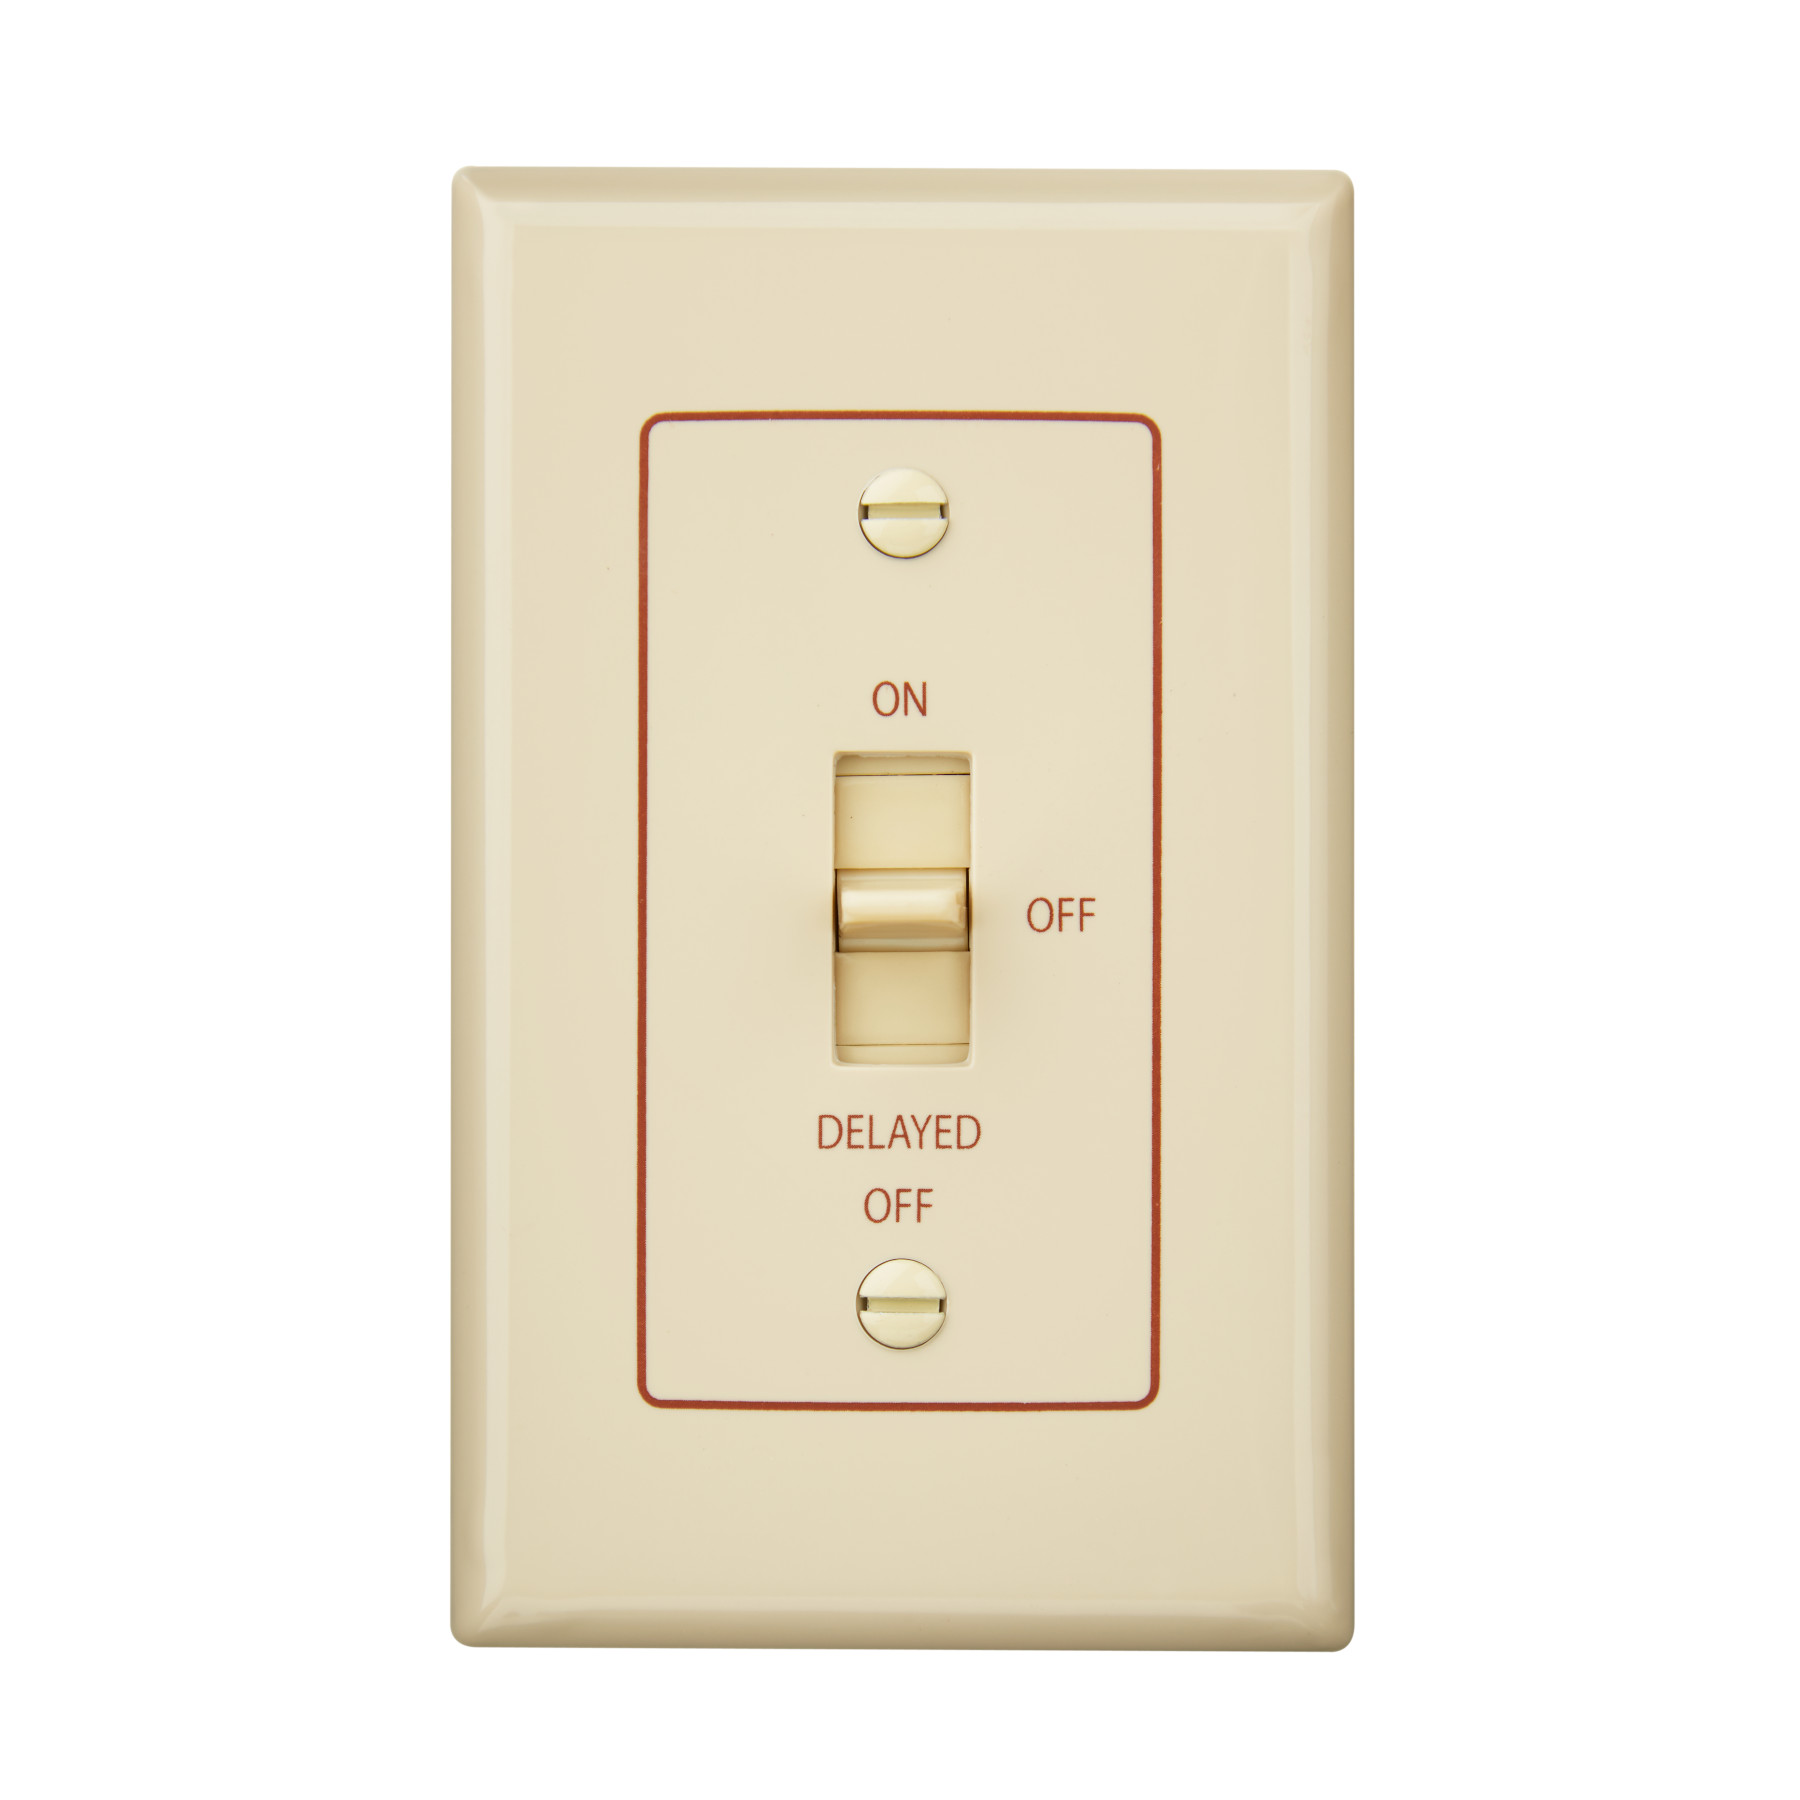 Broan-NuTone® Fan/Light Control w/ Off Delay. 4 amps, 120V, Ivory